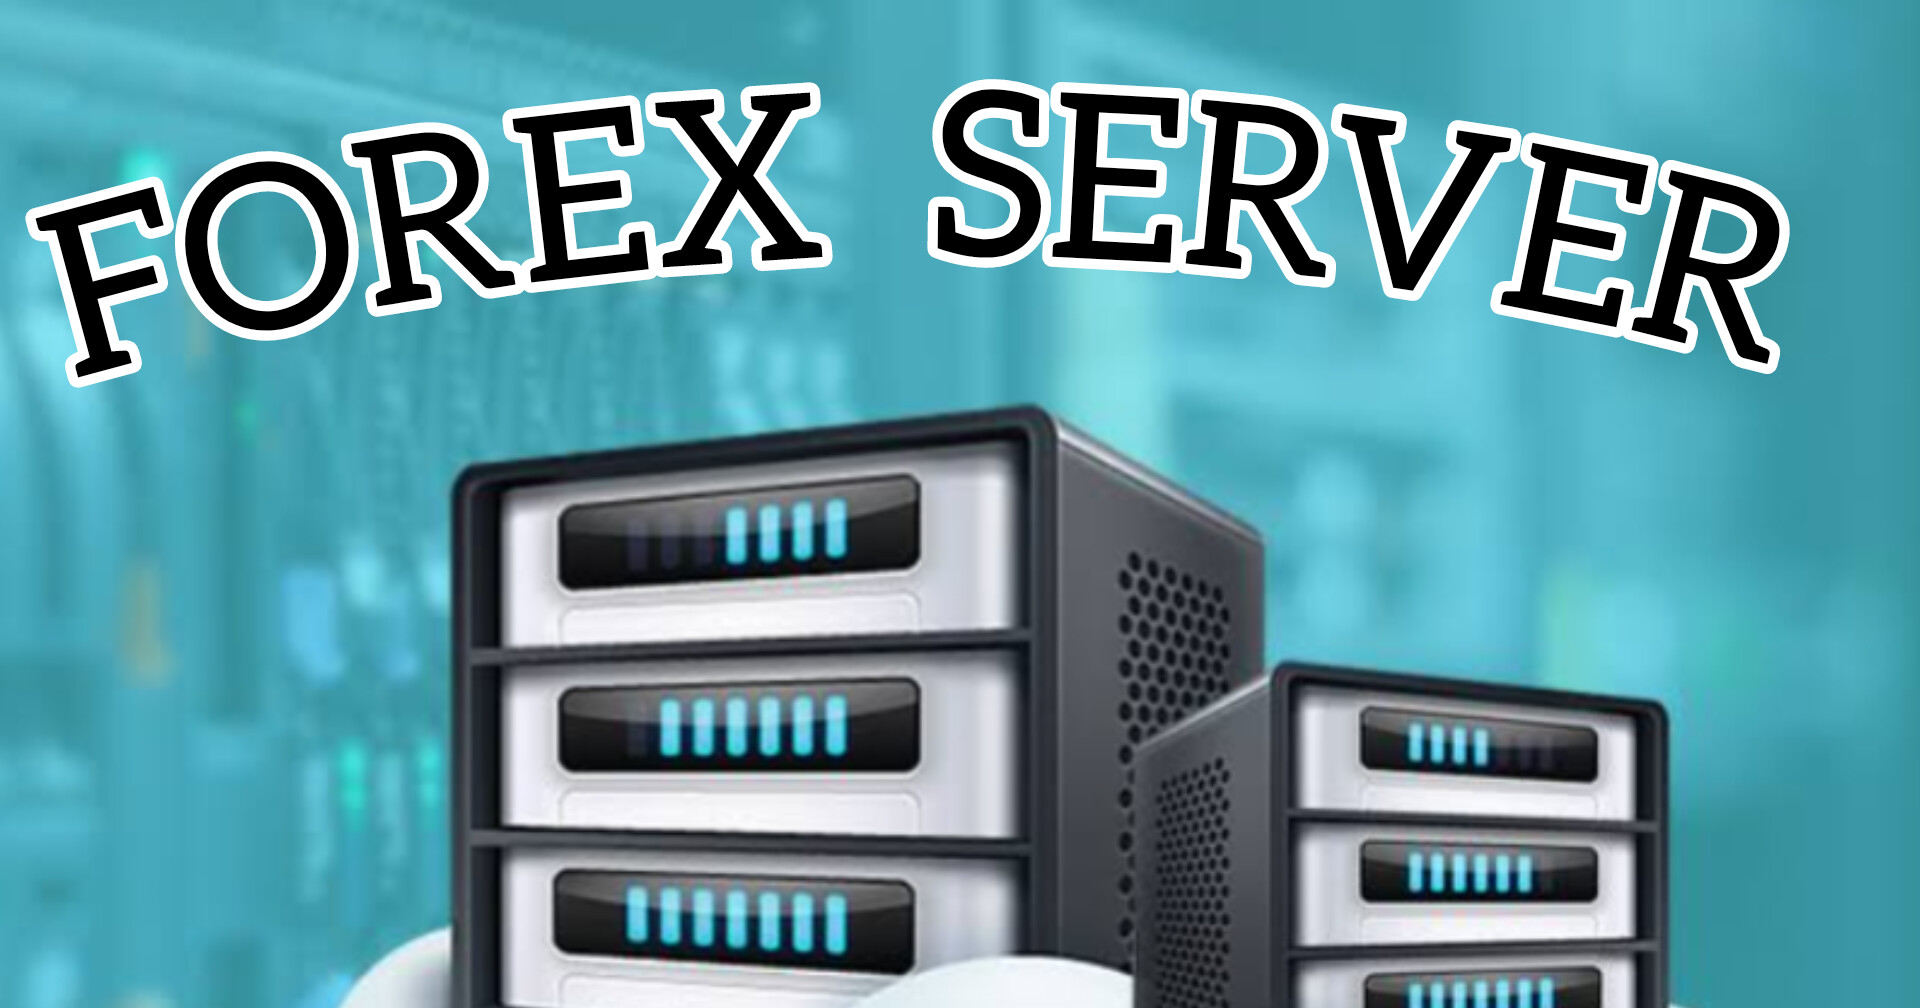 Forex server 